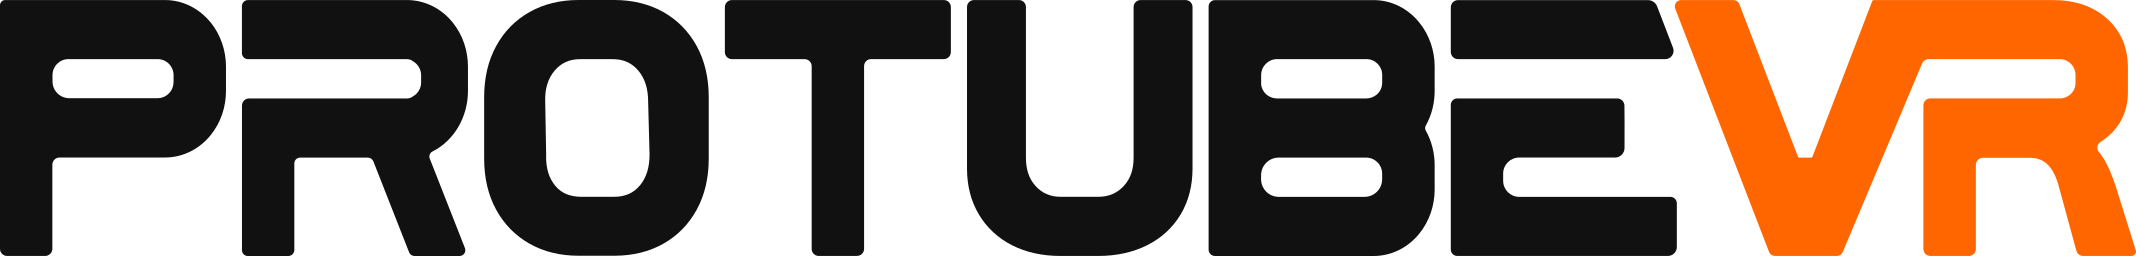 protubevr logo black and orange on white background